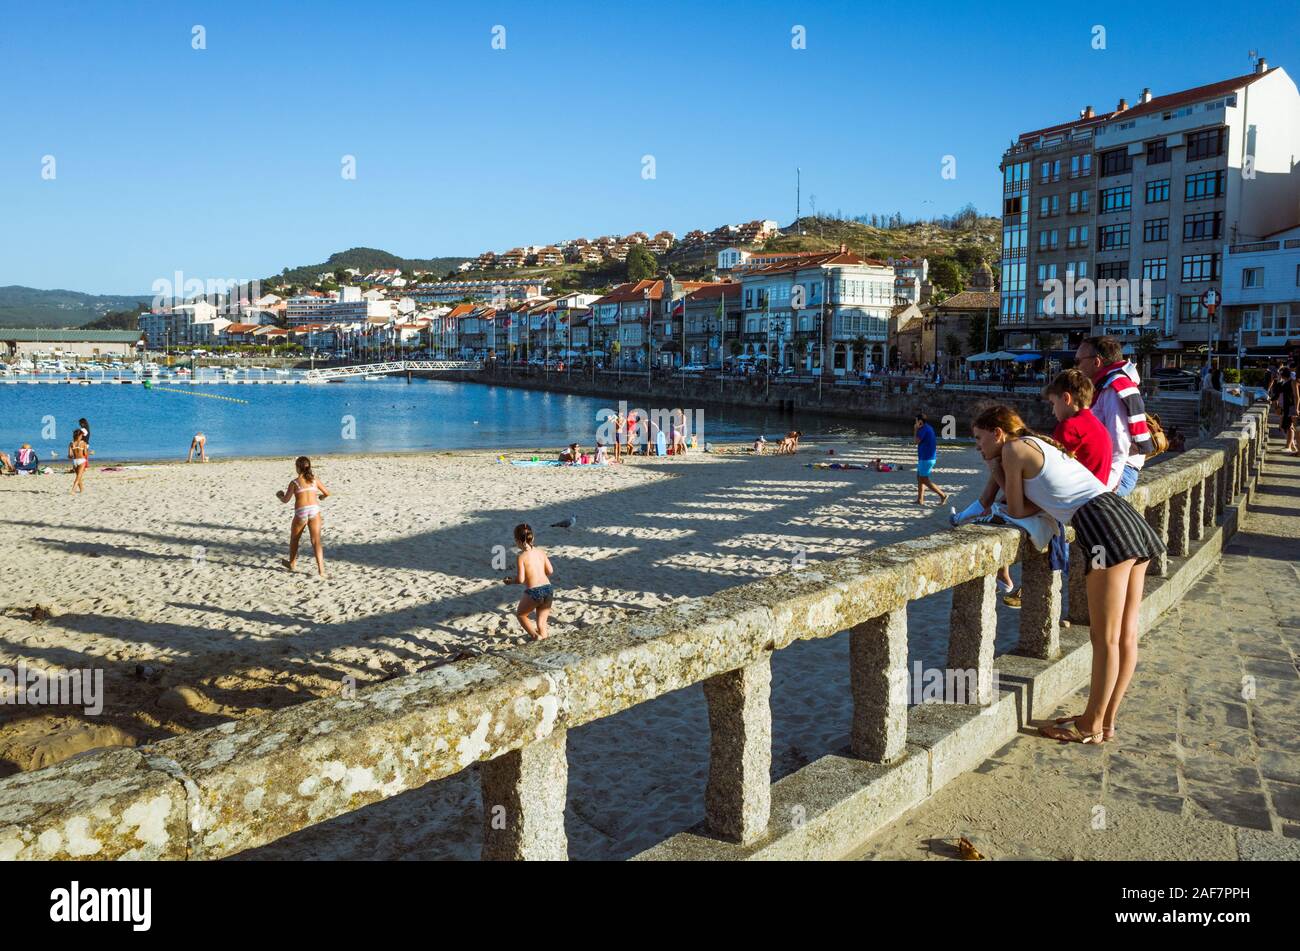 Baiona, Pontevedra province, Galicia, Spain : People relax at the Playa de la Ribera beach in the historical tourist town of Baiona. Stock Photo